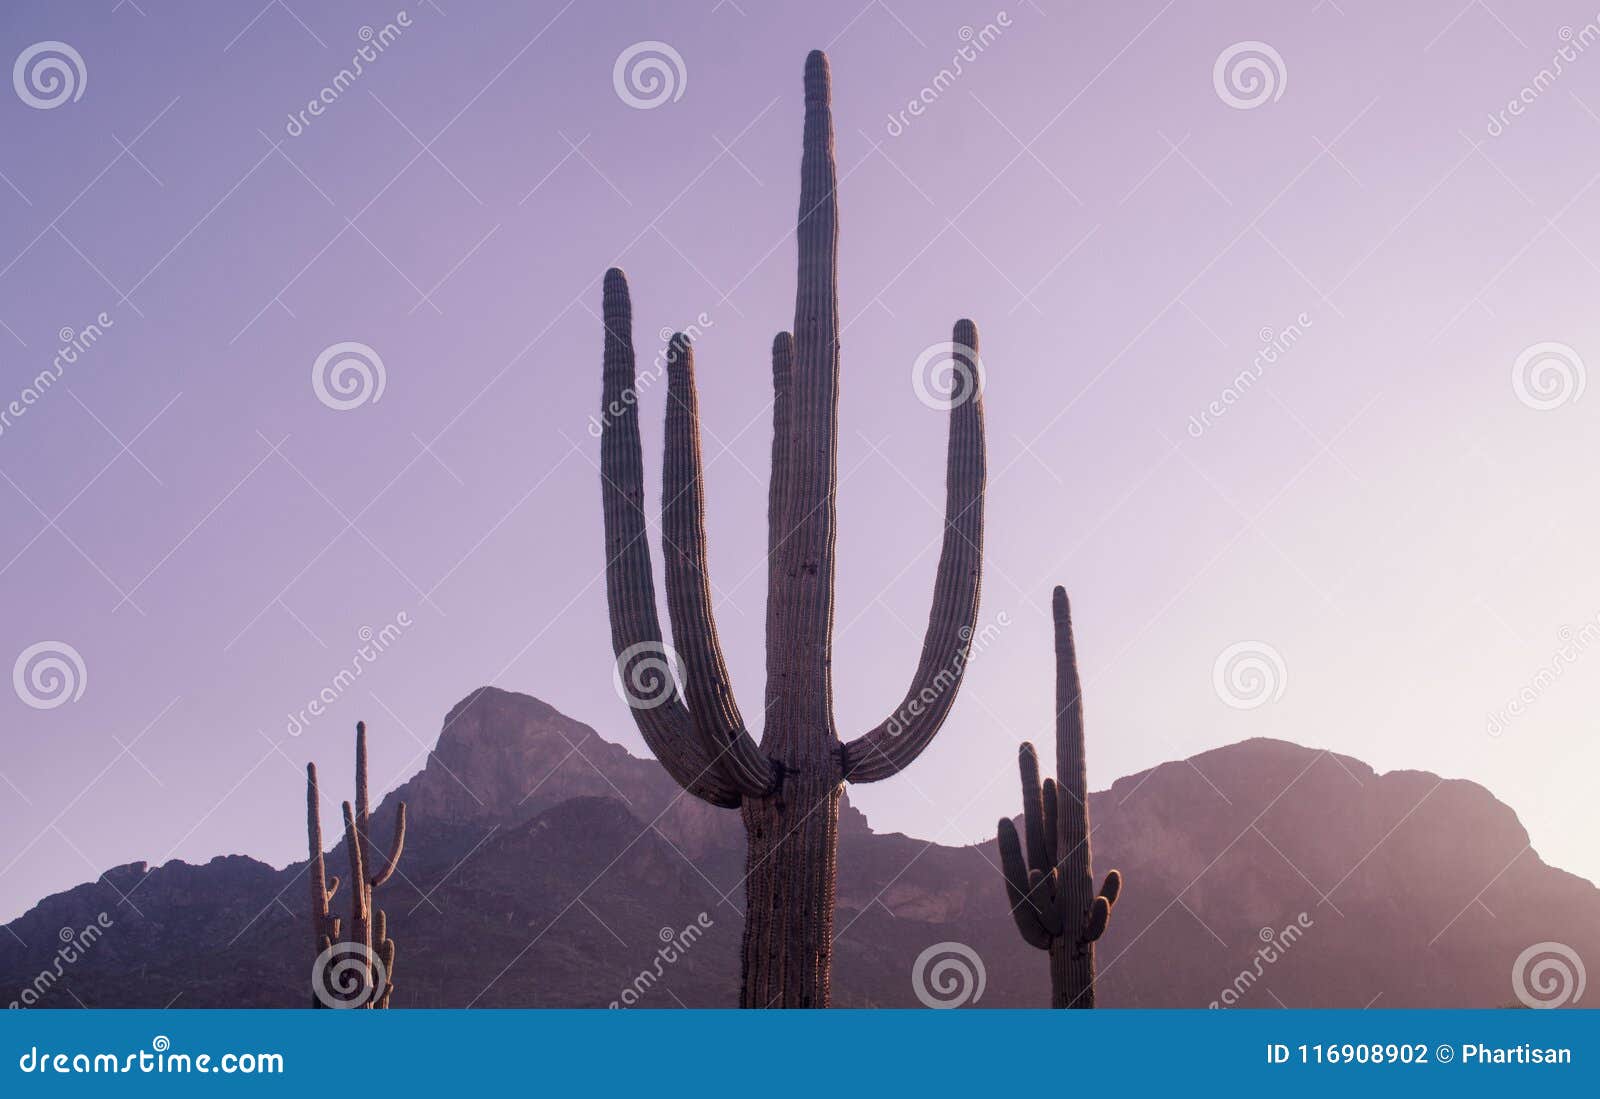 cactus tree in south west,usa, located near phoenix, arizona.